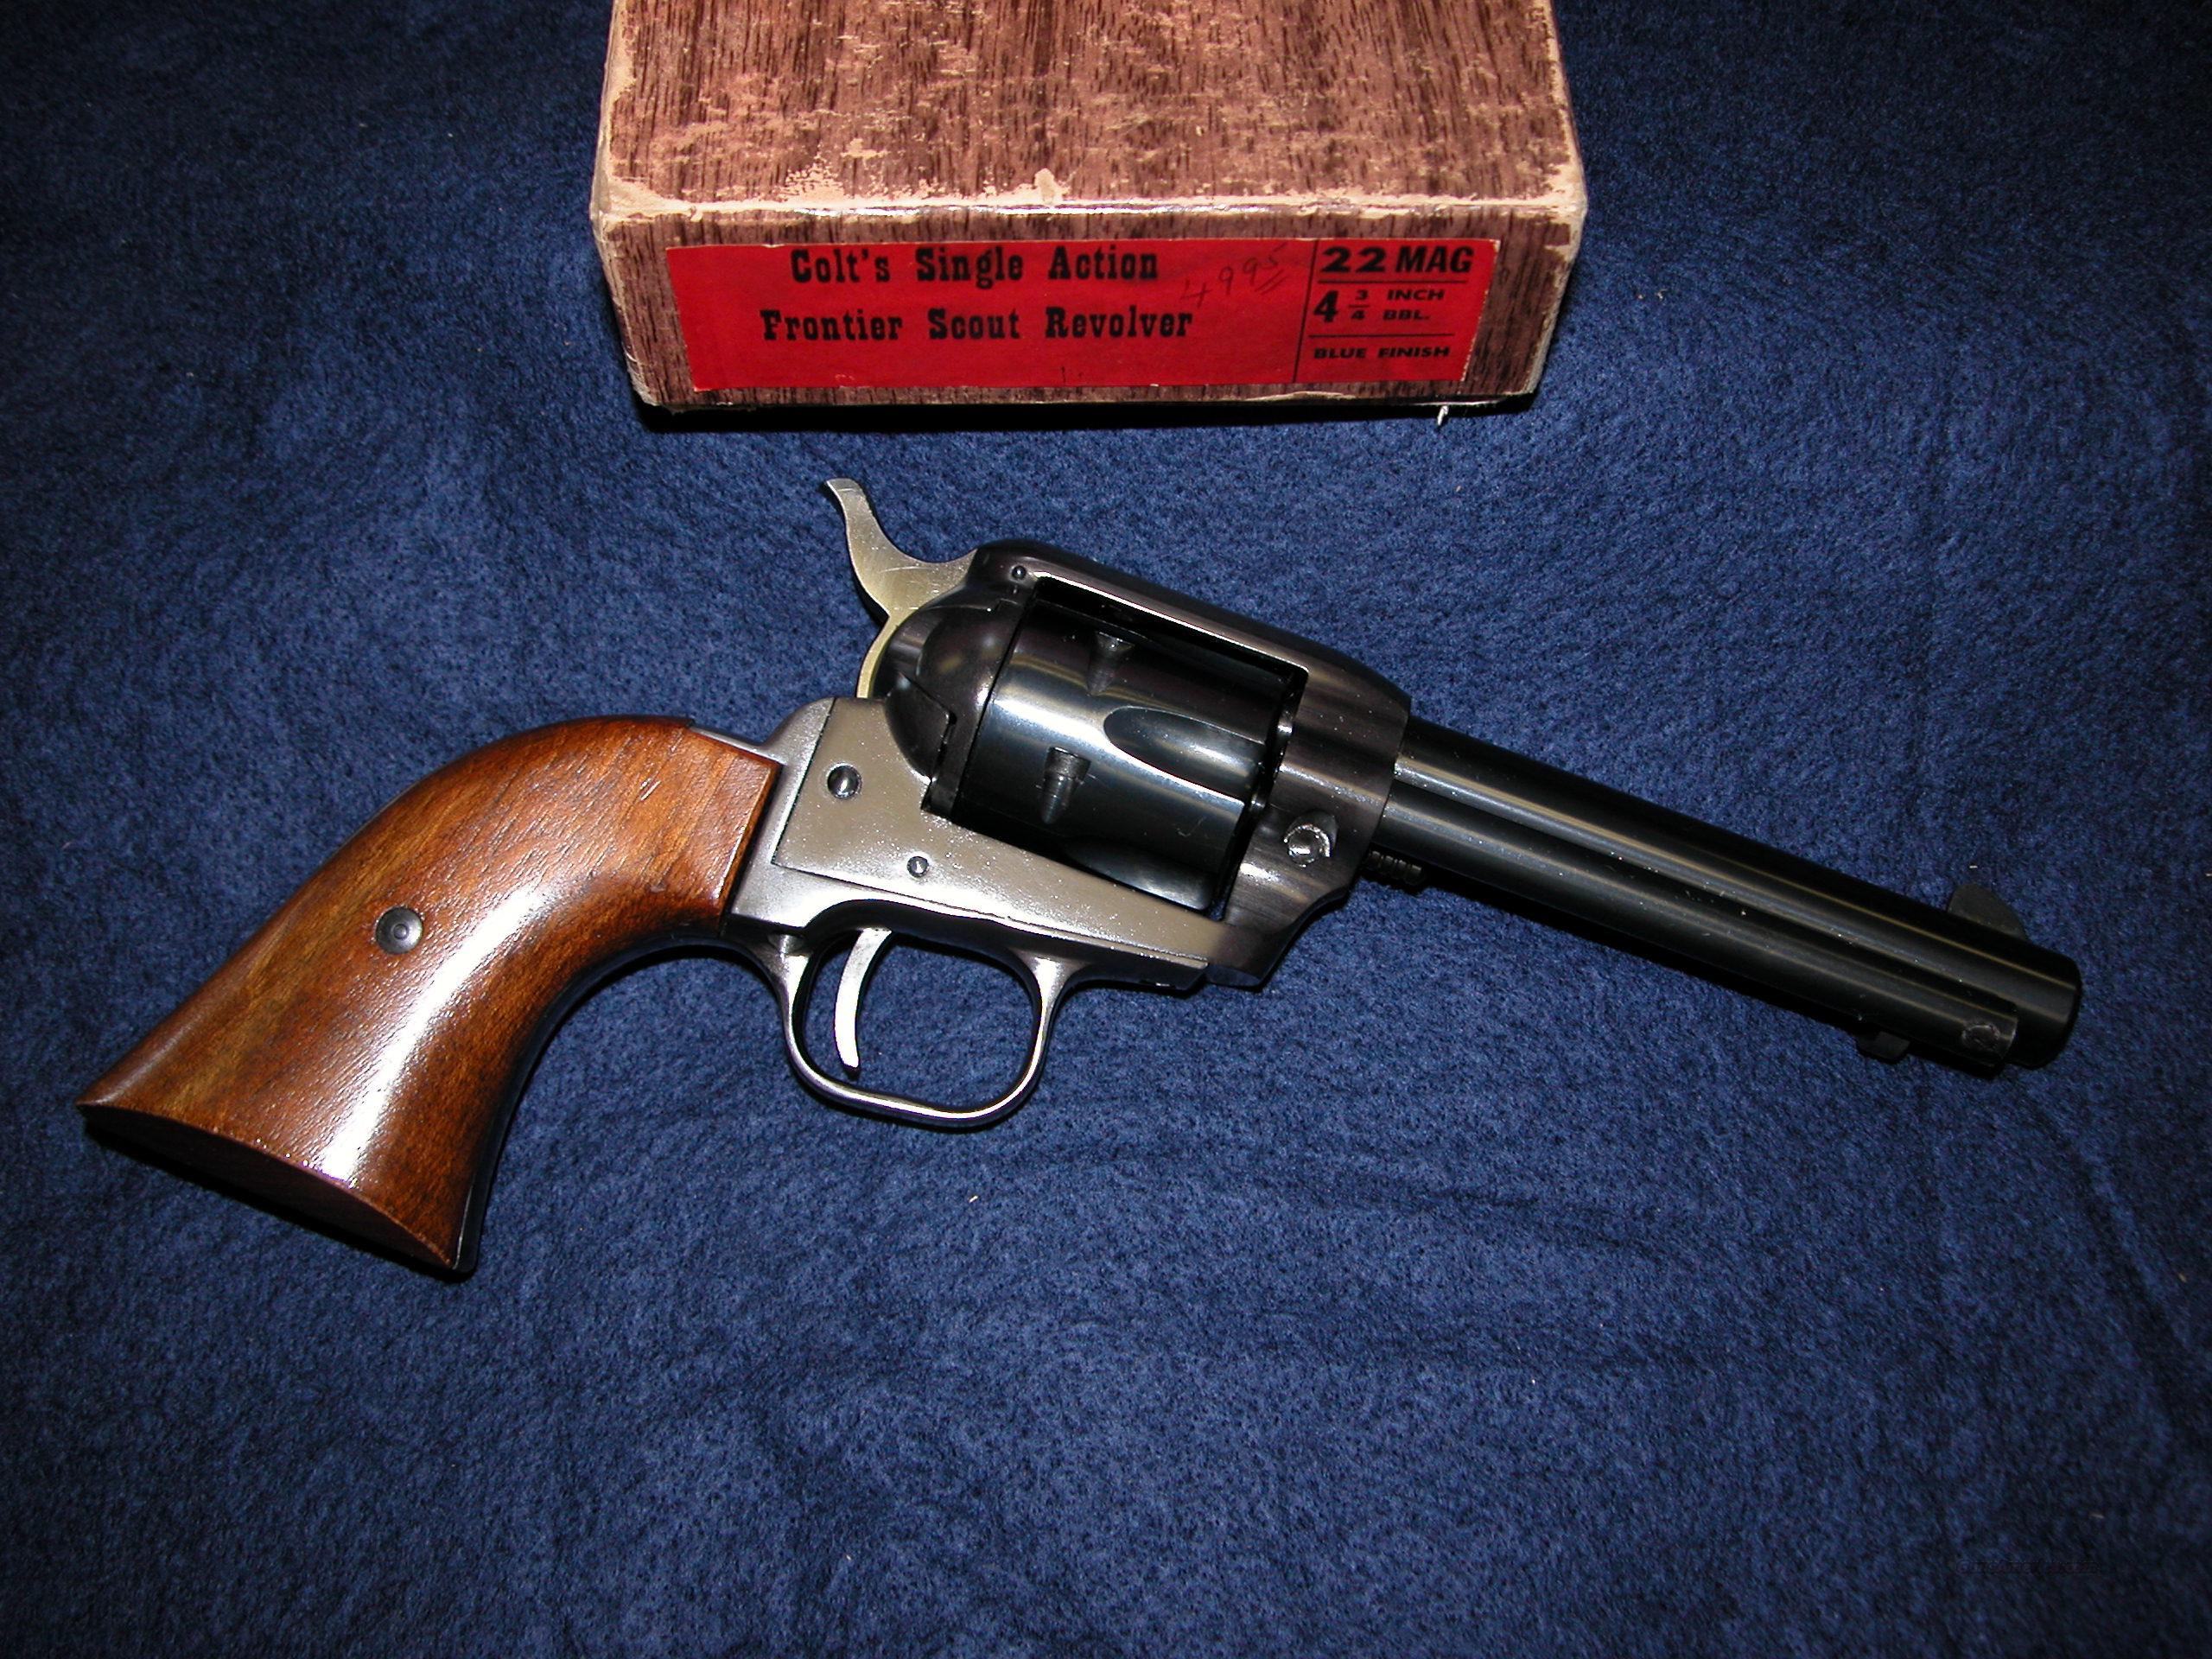 Colt Single Action 22lr Frontier Scout Revolver For Sale - Bank2home.com